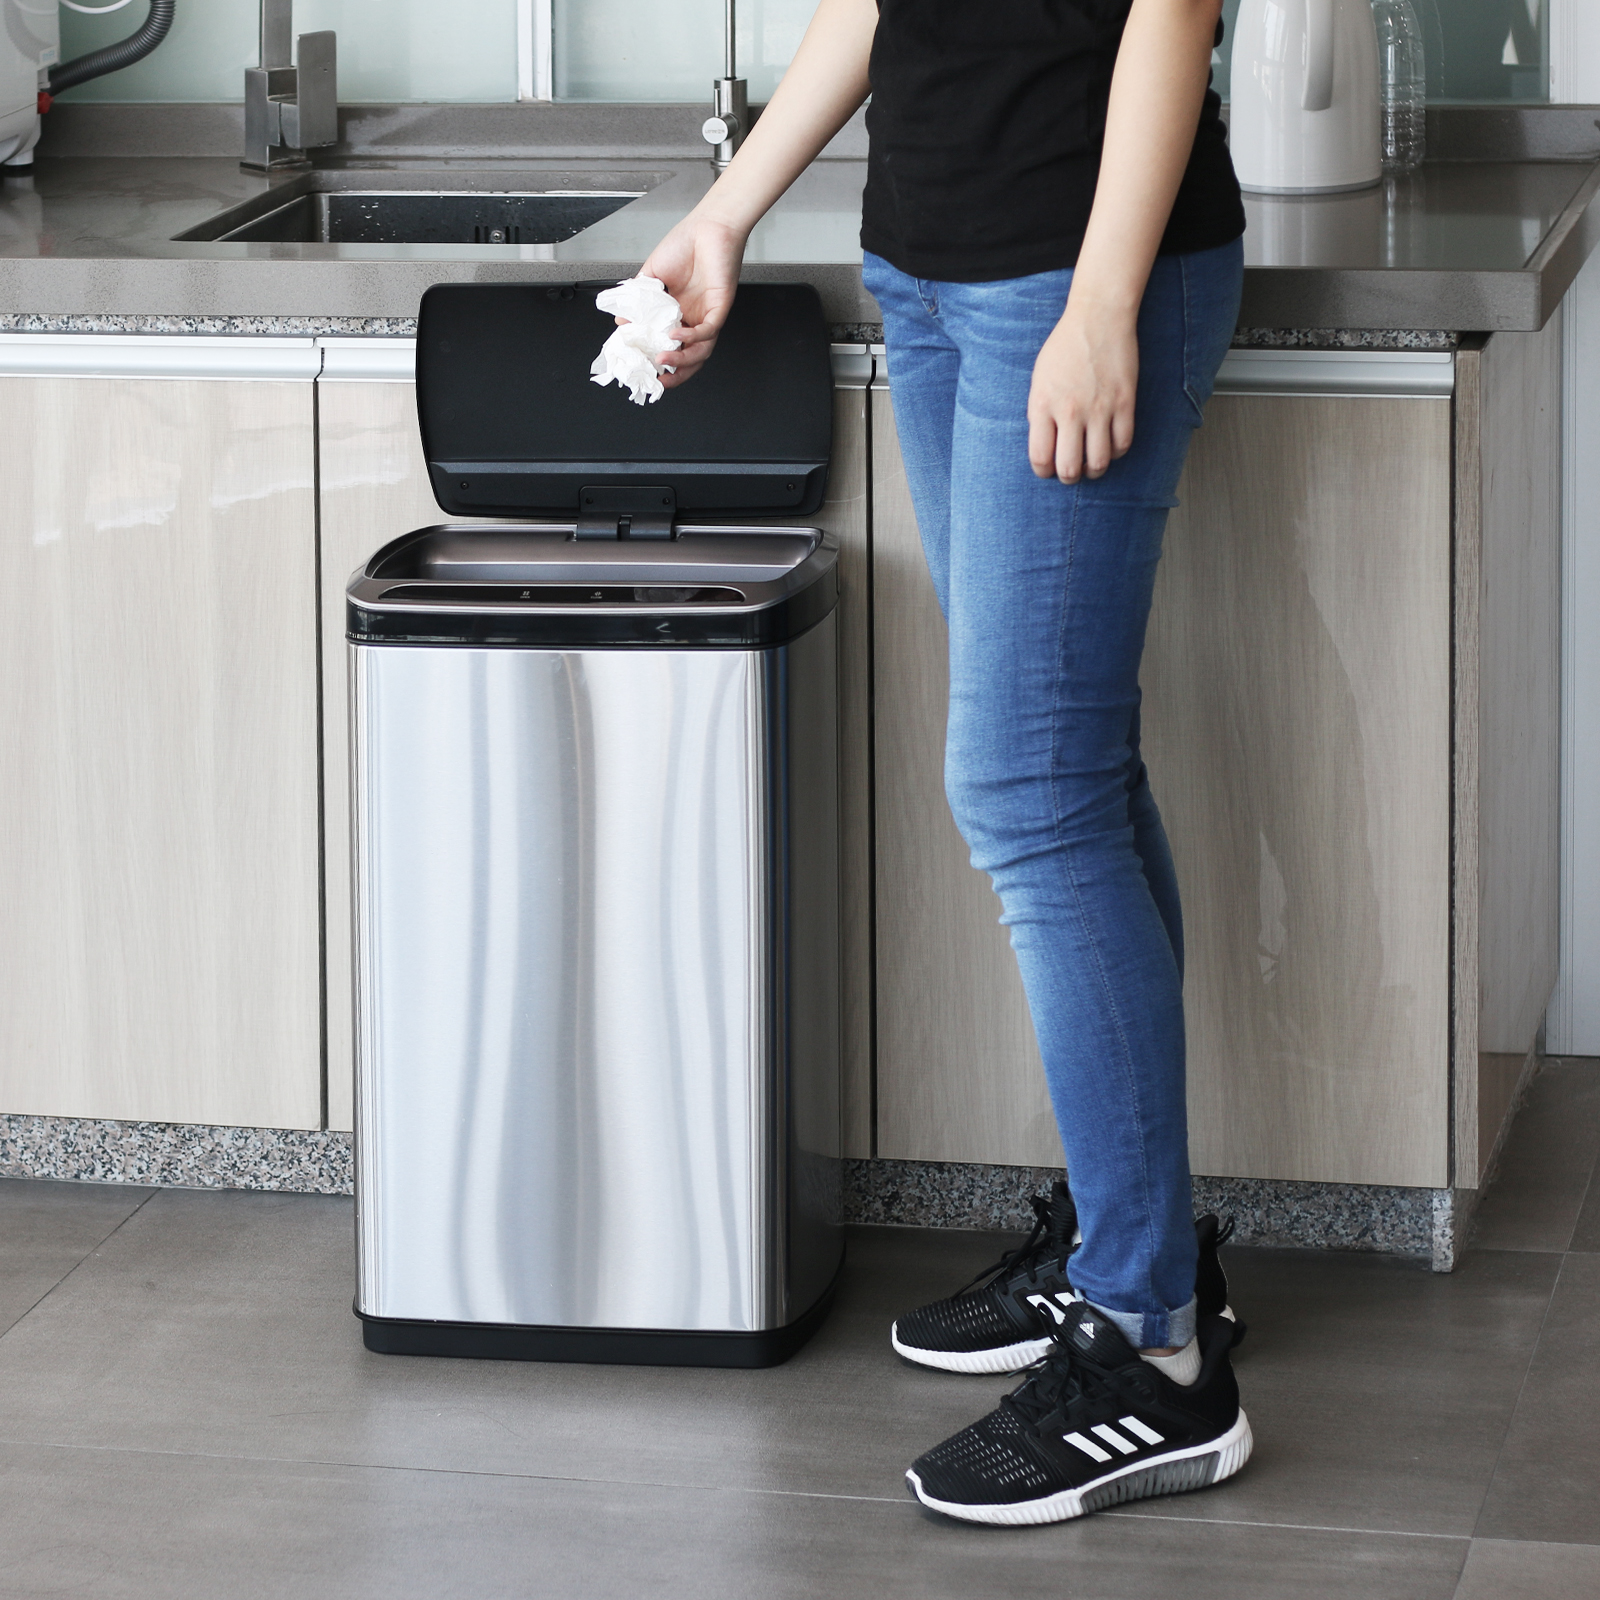 50L/30L smart trash can sensor stainless steel trash can garbage cans trash garbage bin for kitchen